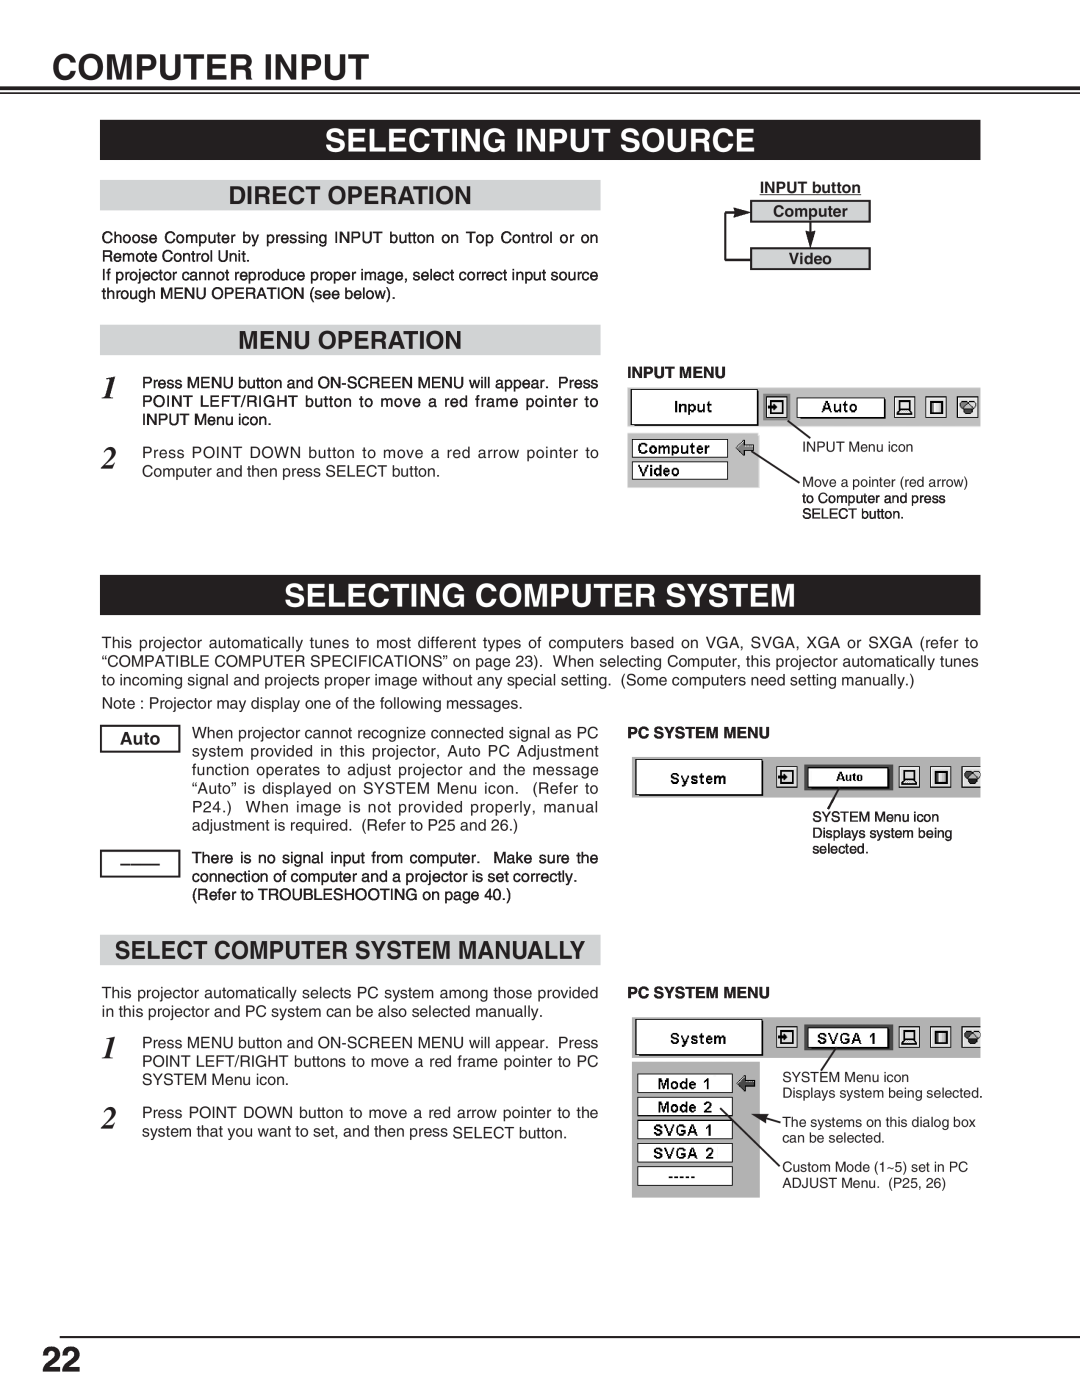 BOXLIGHT cp-305t manual Computer Input, Selecting Input Source, Selecting Computer System, Select Computer System Manually 